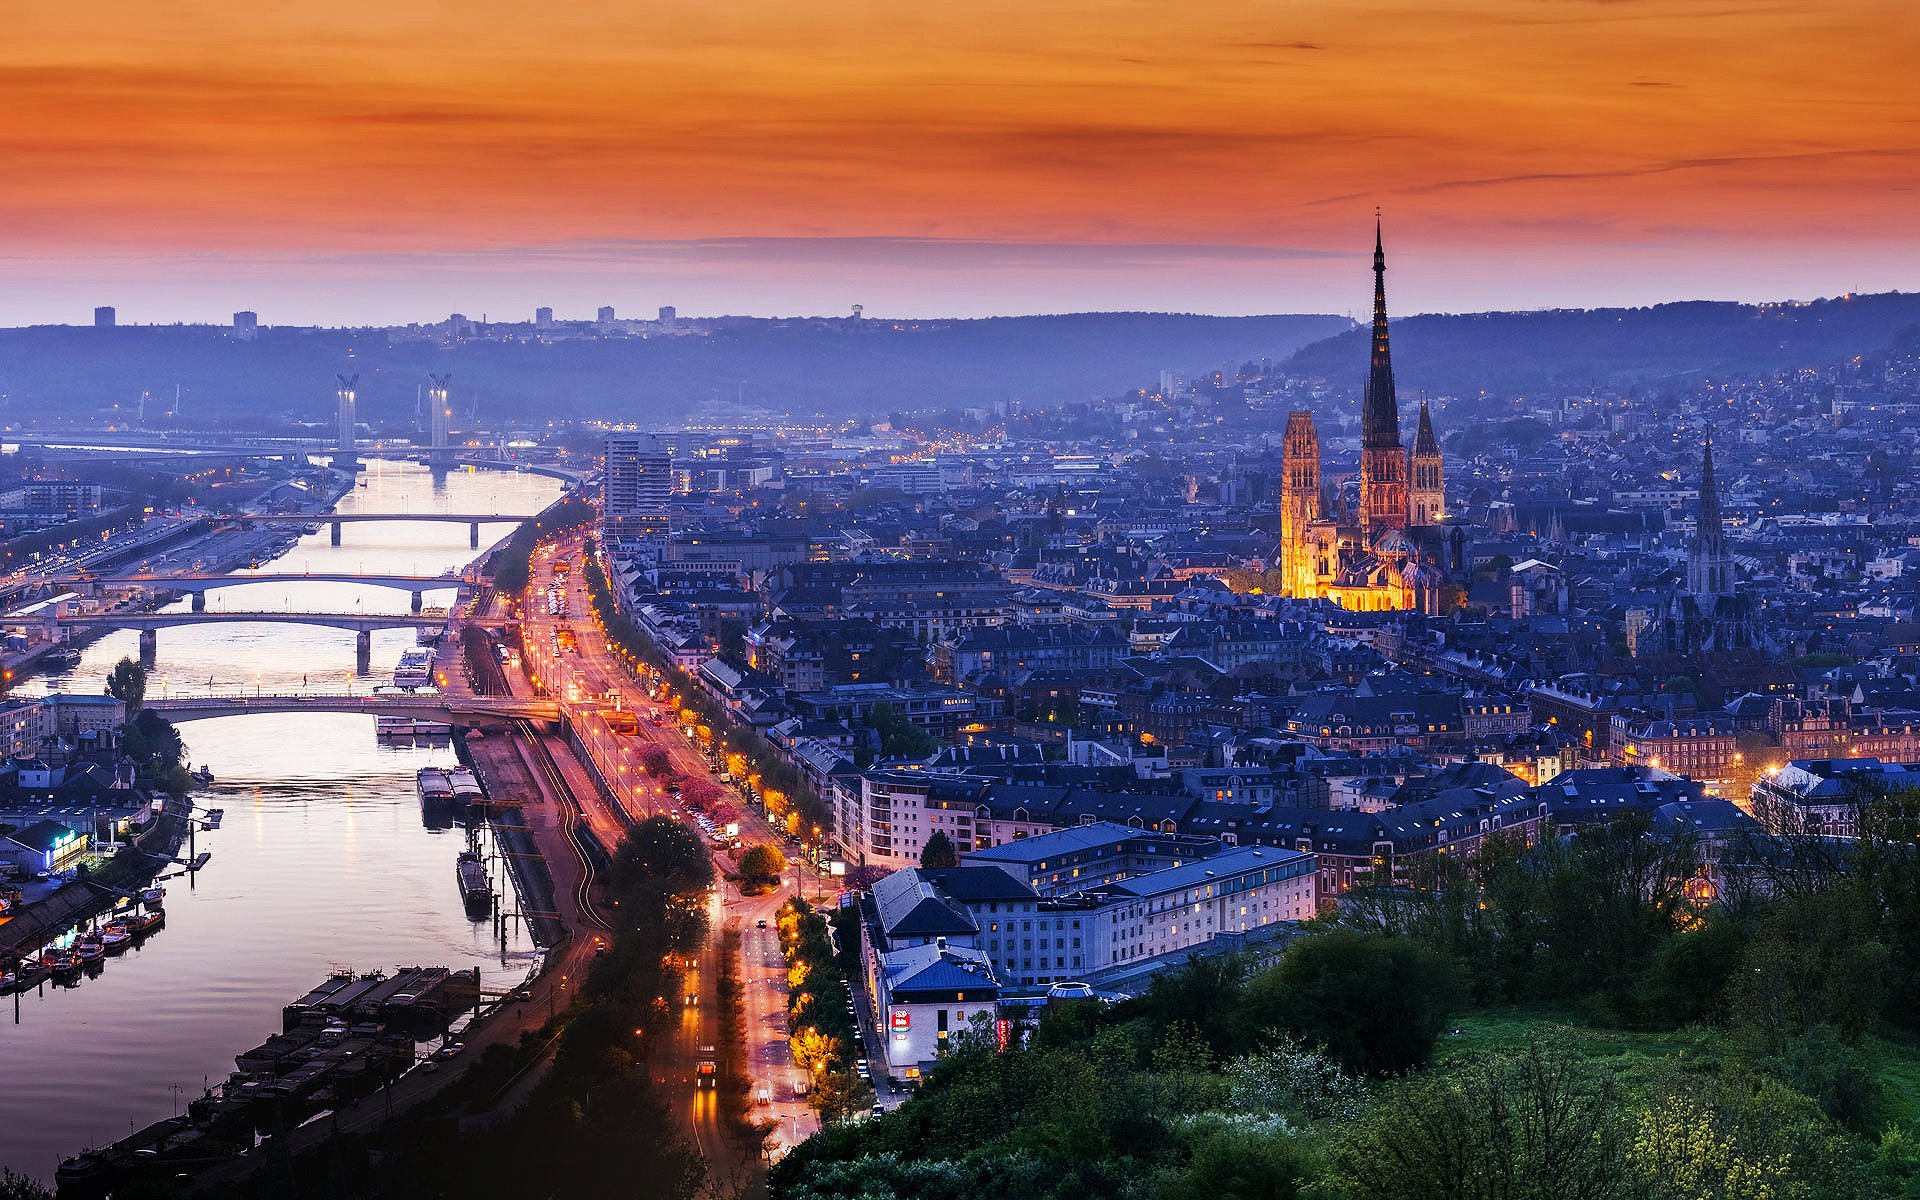 История нормандии. Город Rouen Франция. Нормандия Франция Руан. Руан - столица Нормандии. Город Руан Франция фото.